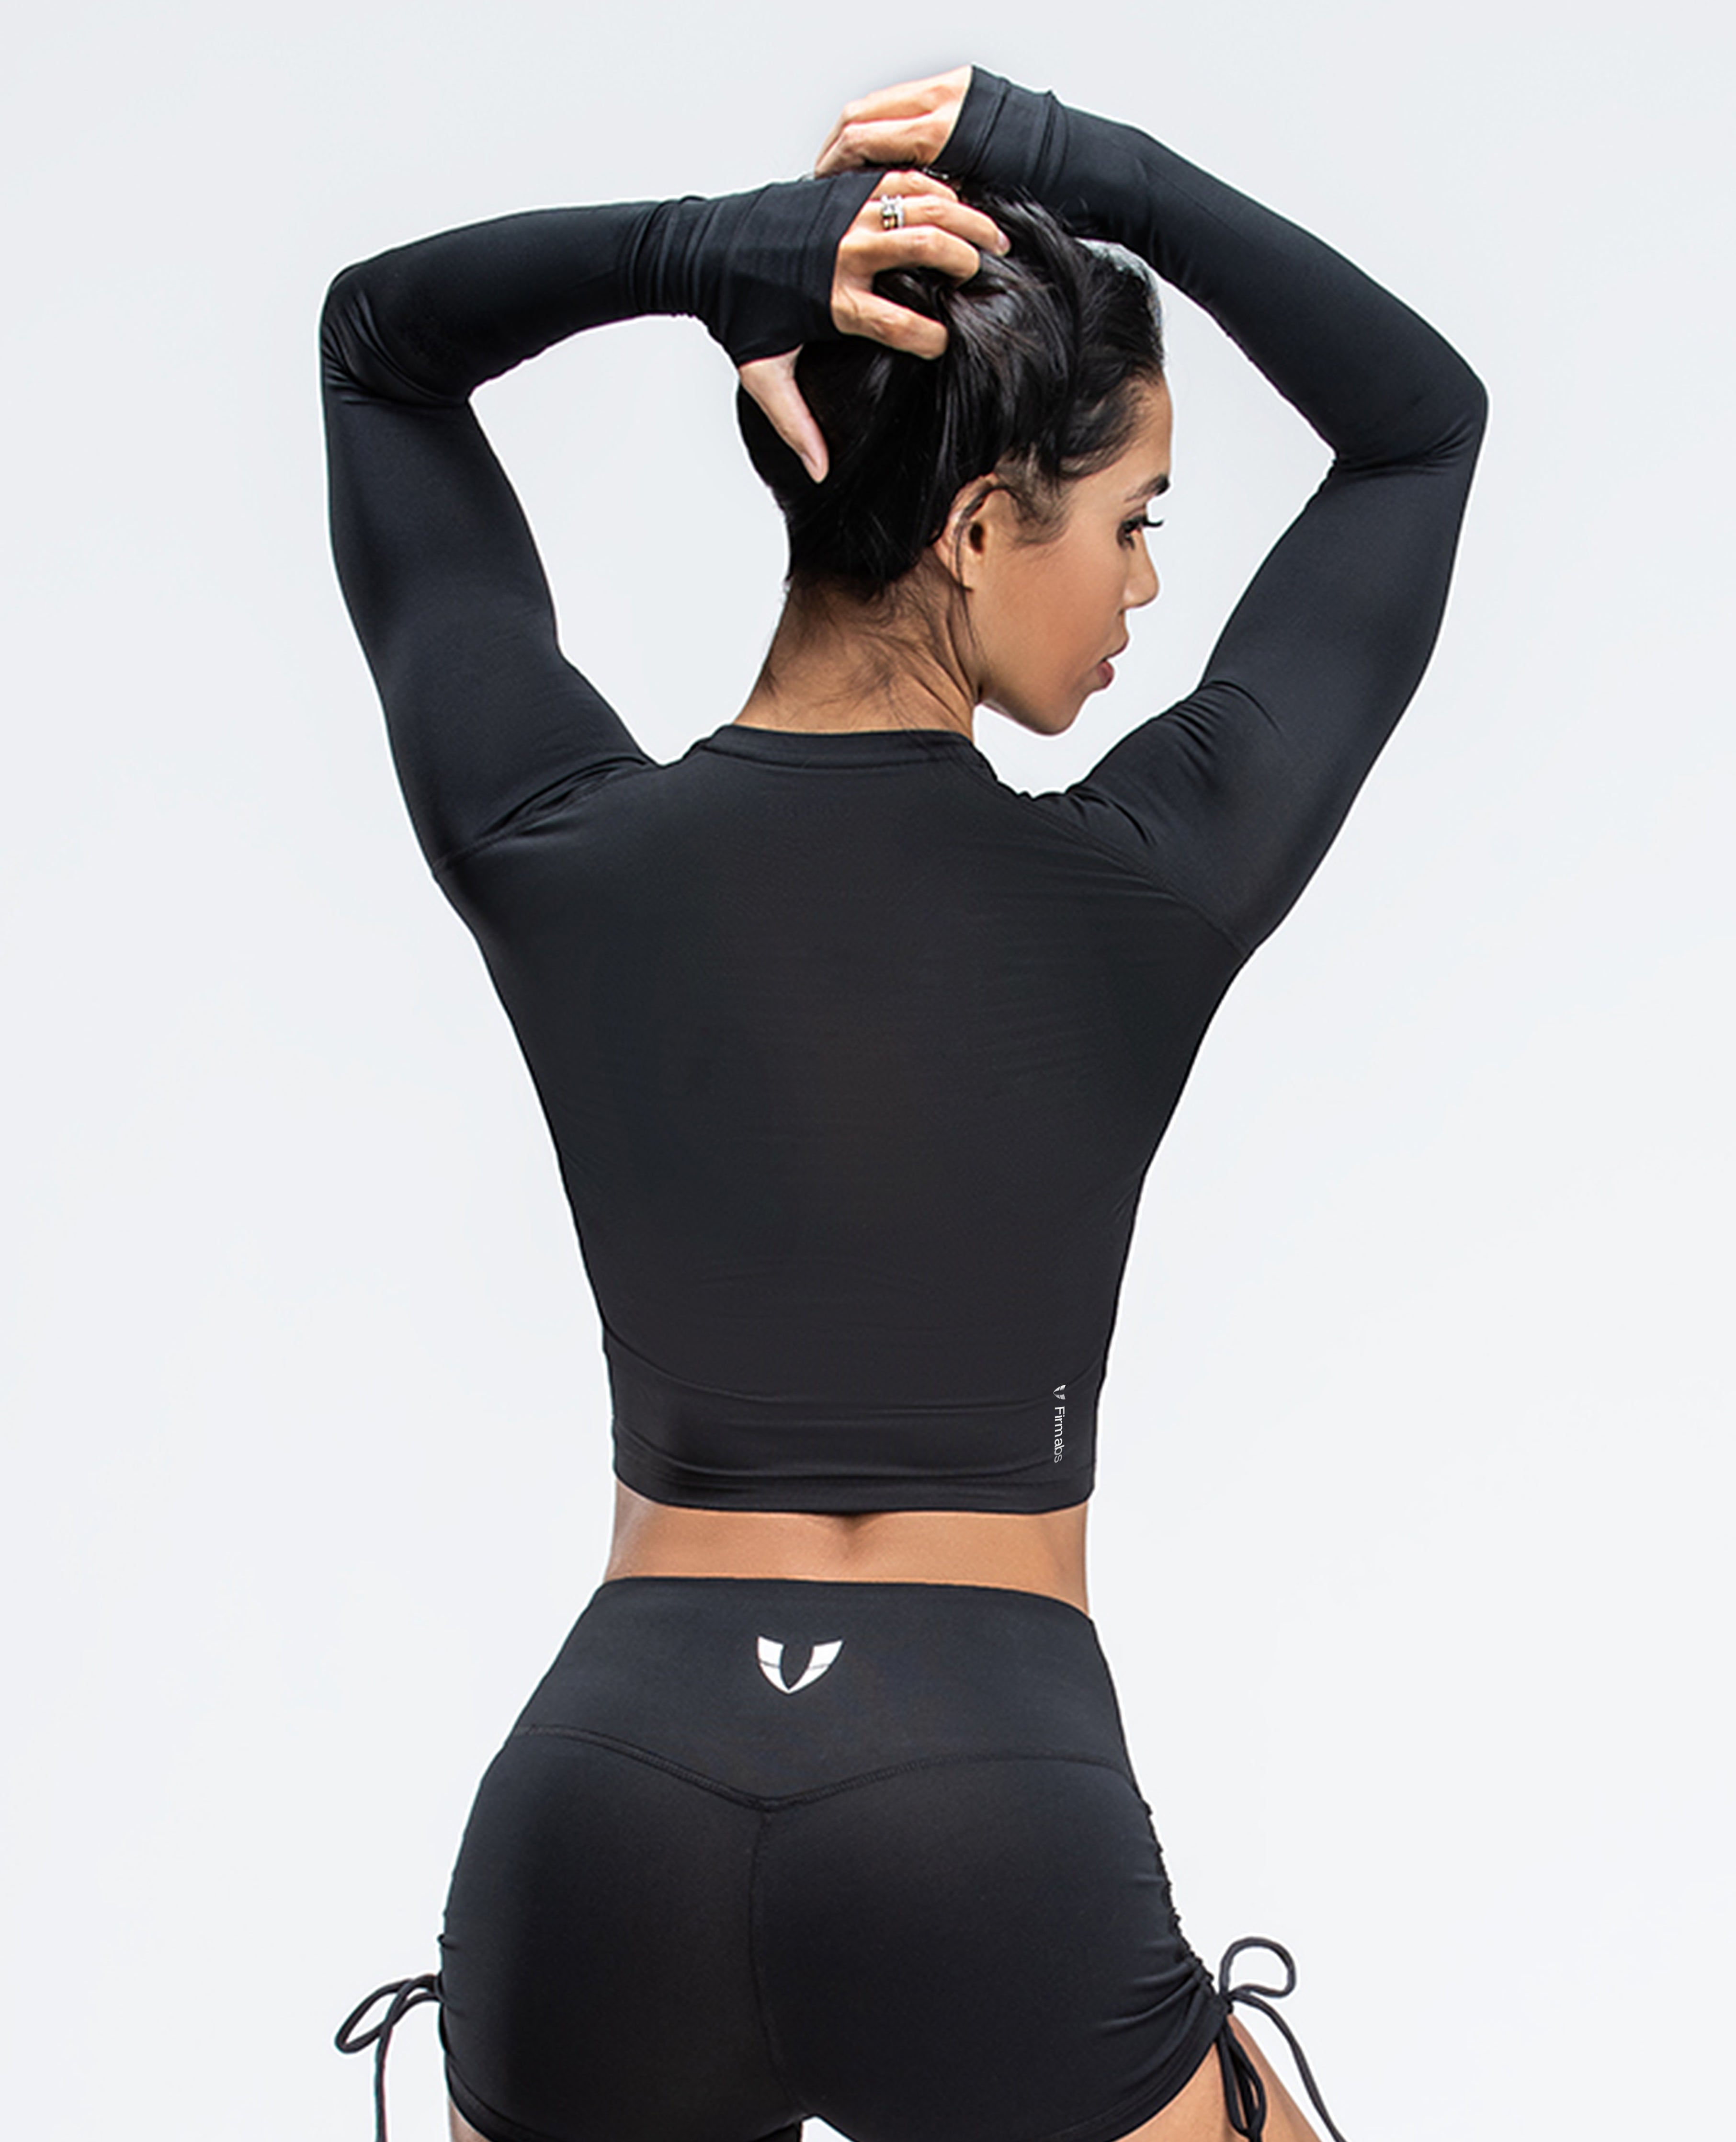 Cropped Black Long Sleeve Workout Top - Women